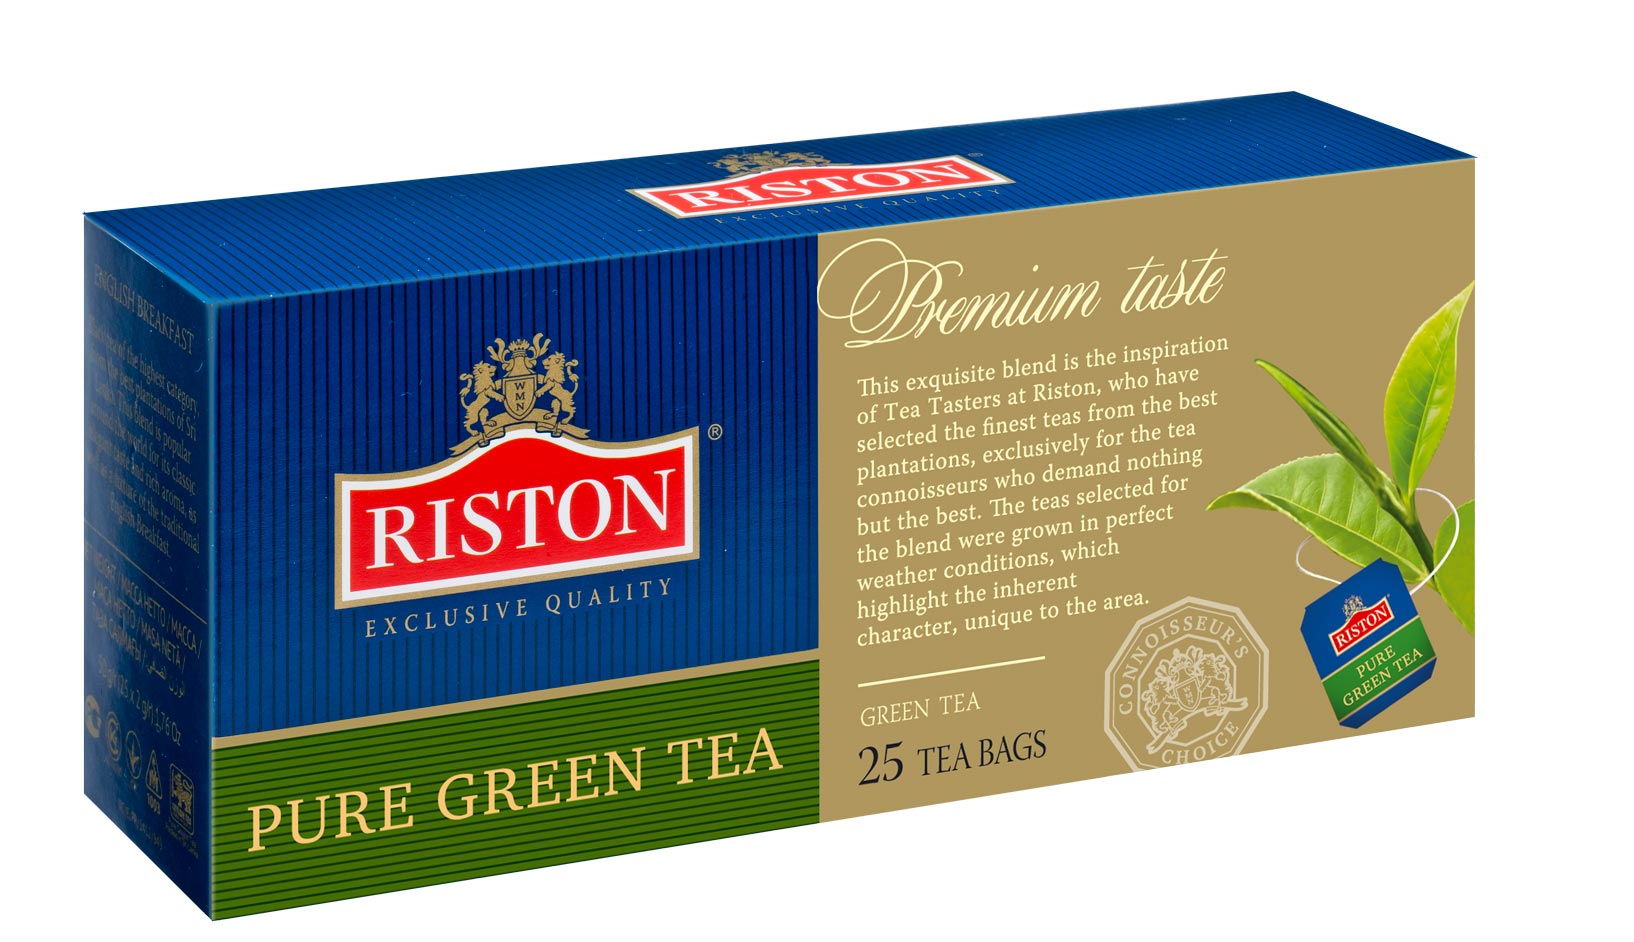 PURE GREEN TEA